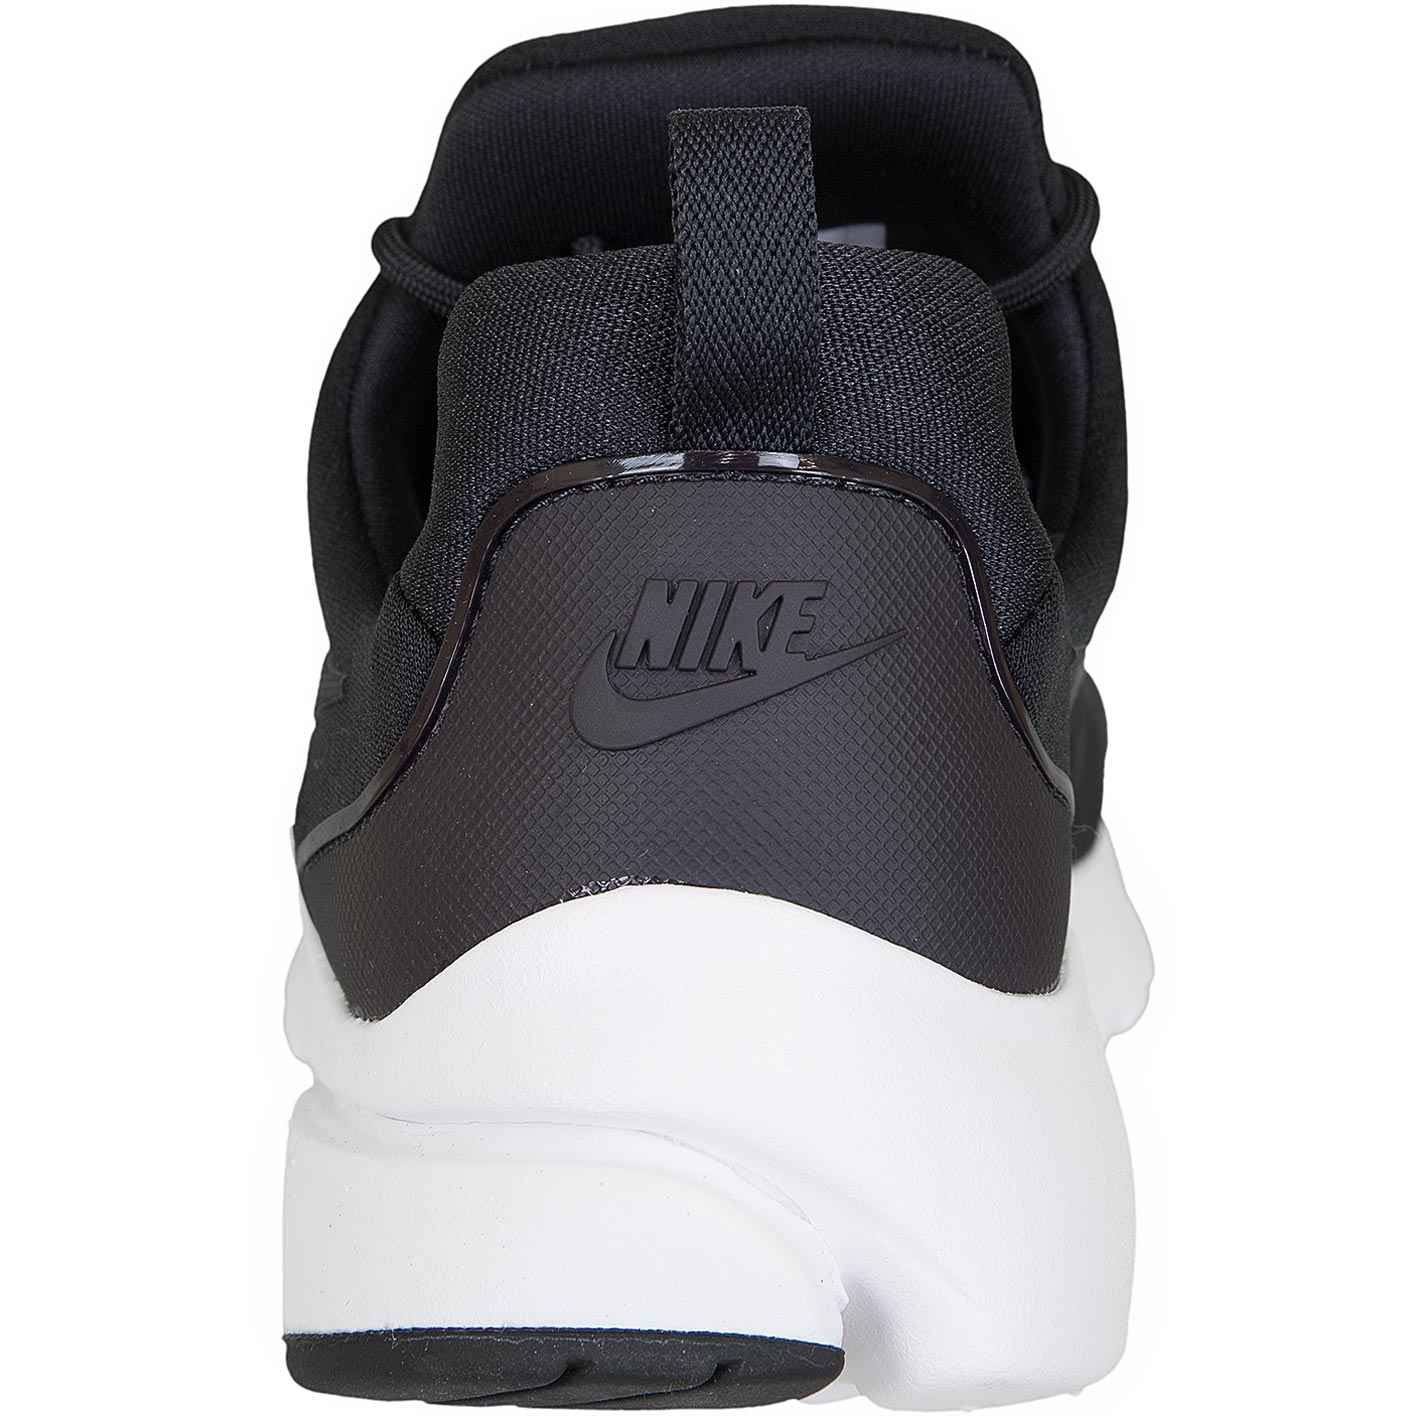 ☆ Nike Damen Sneaker Presto Fly Premium grau/schwarz - hier bestellen!